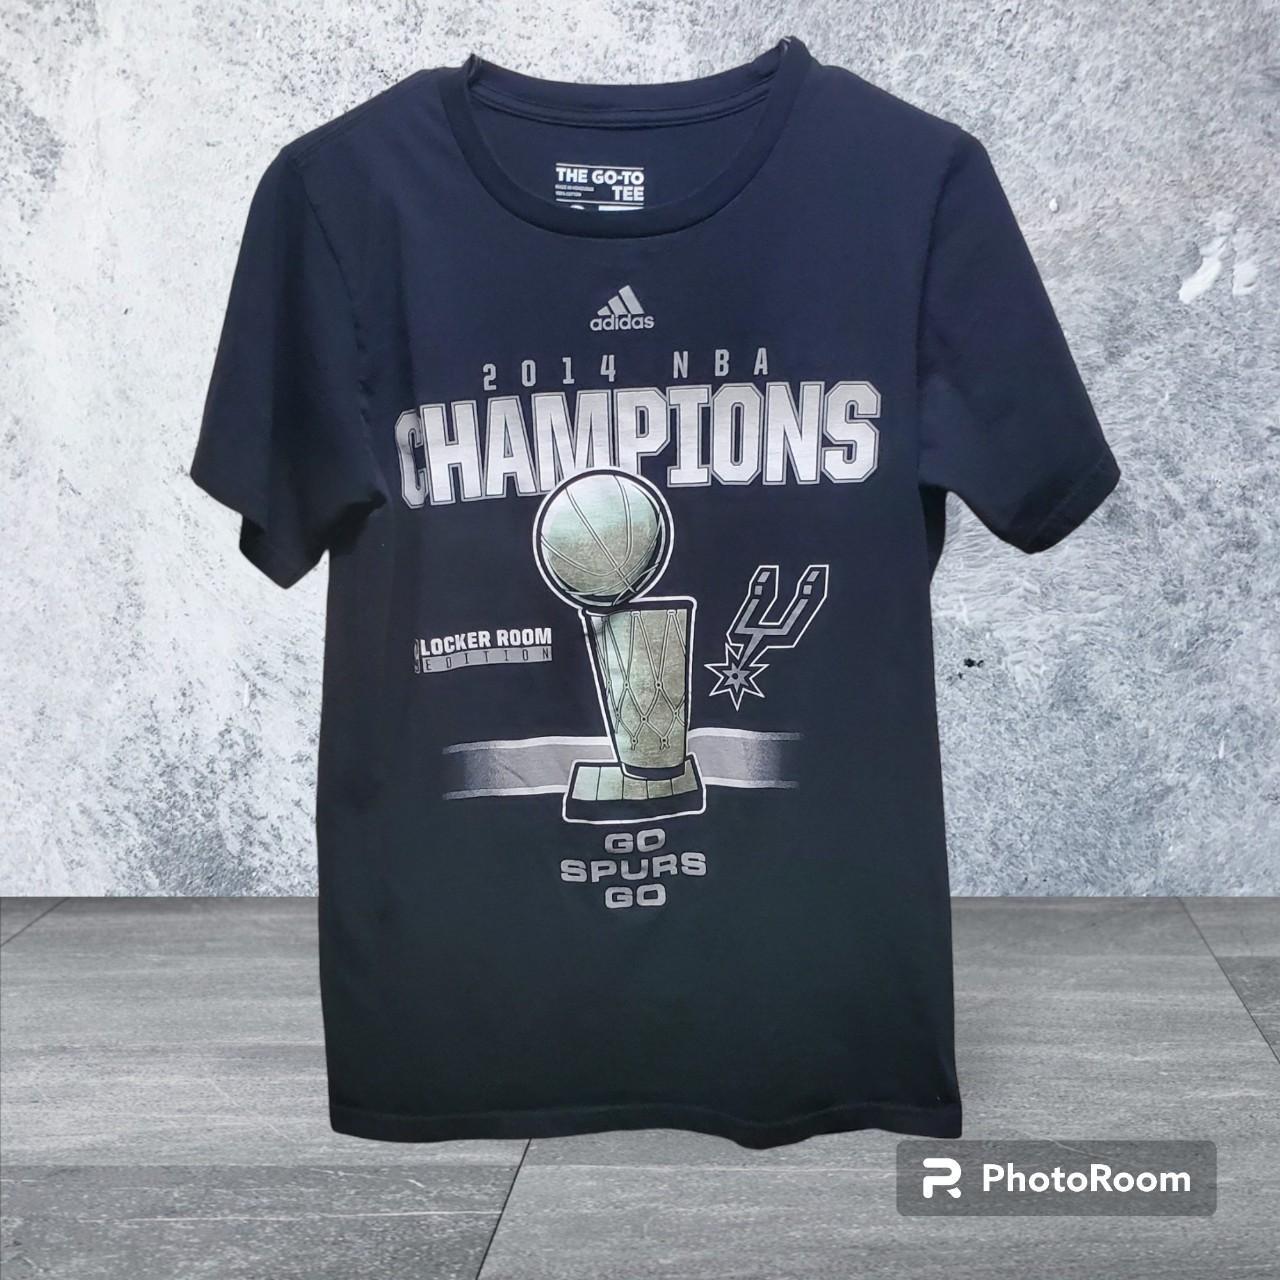 Adidas San Antonio Spurs Championship Ring T-shirt Size XL